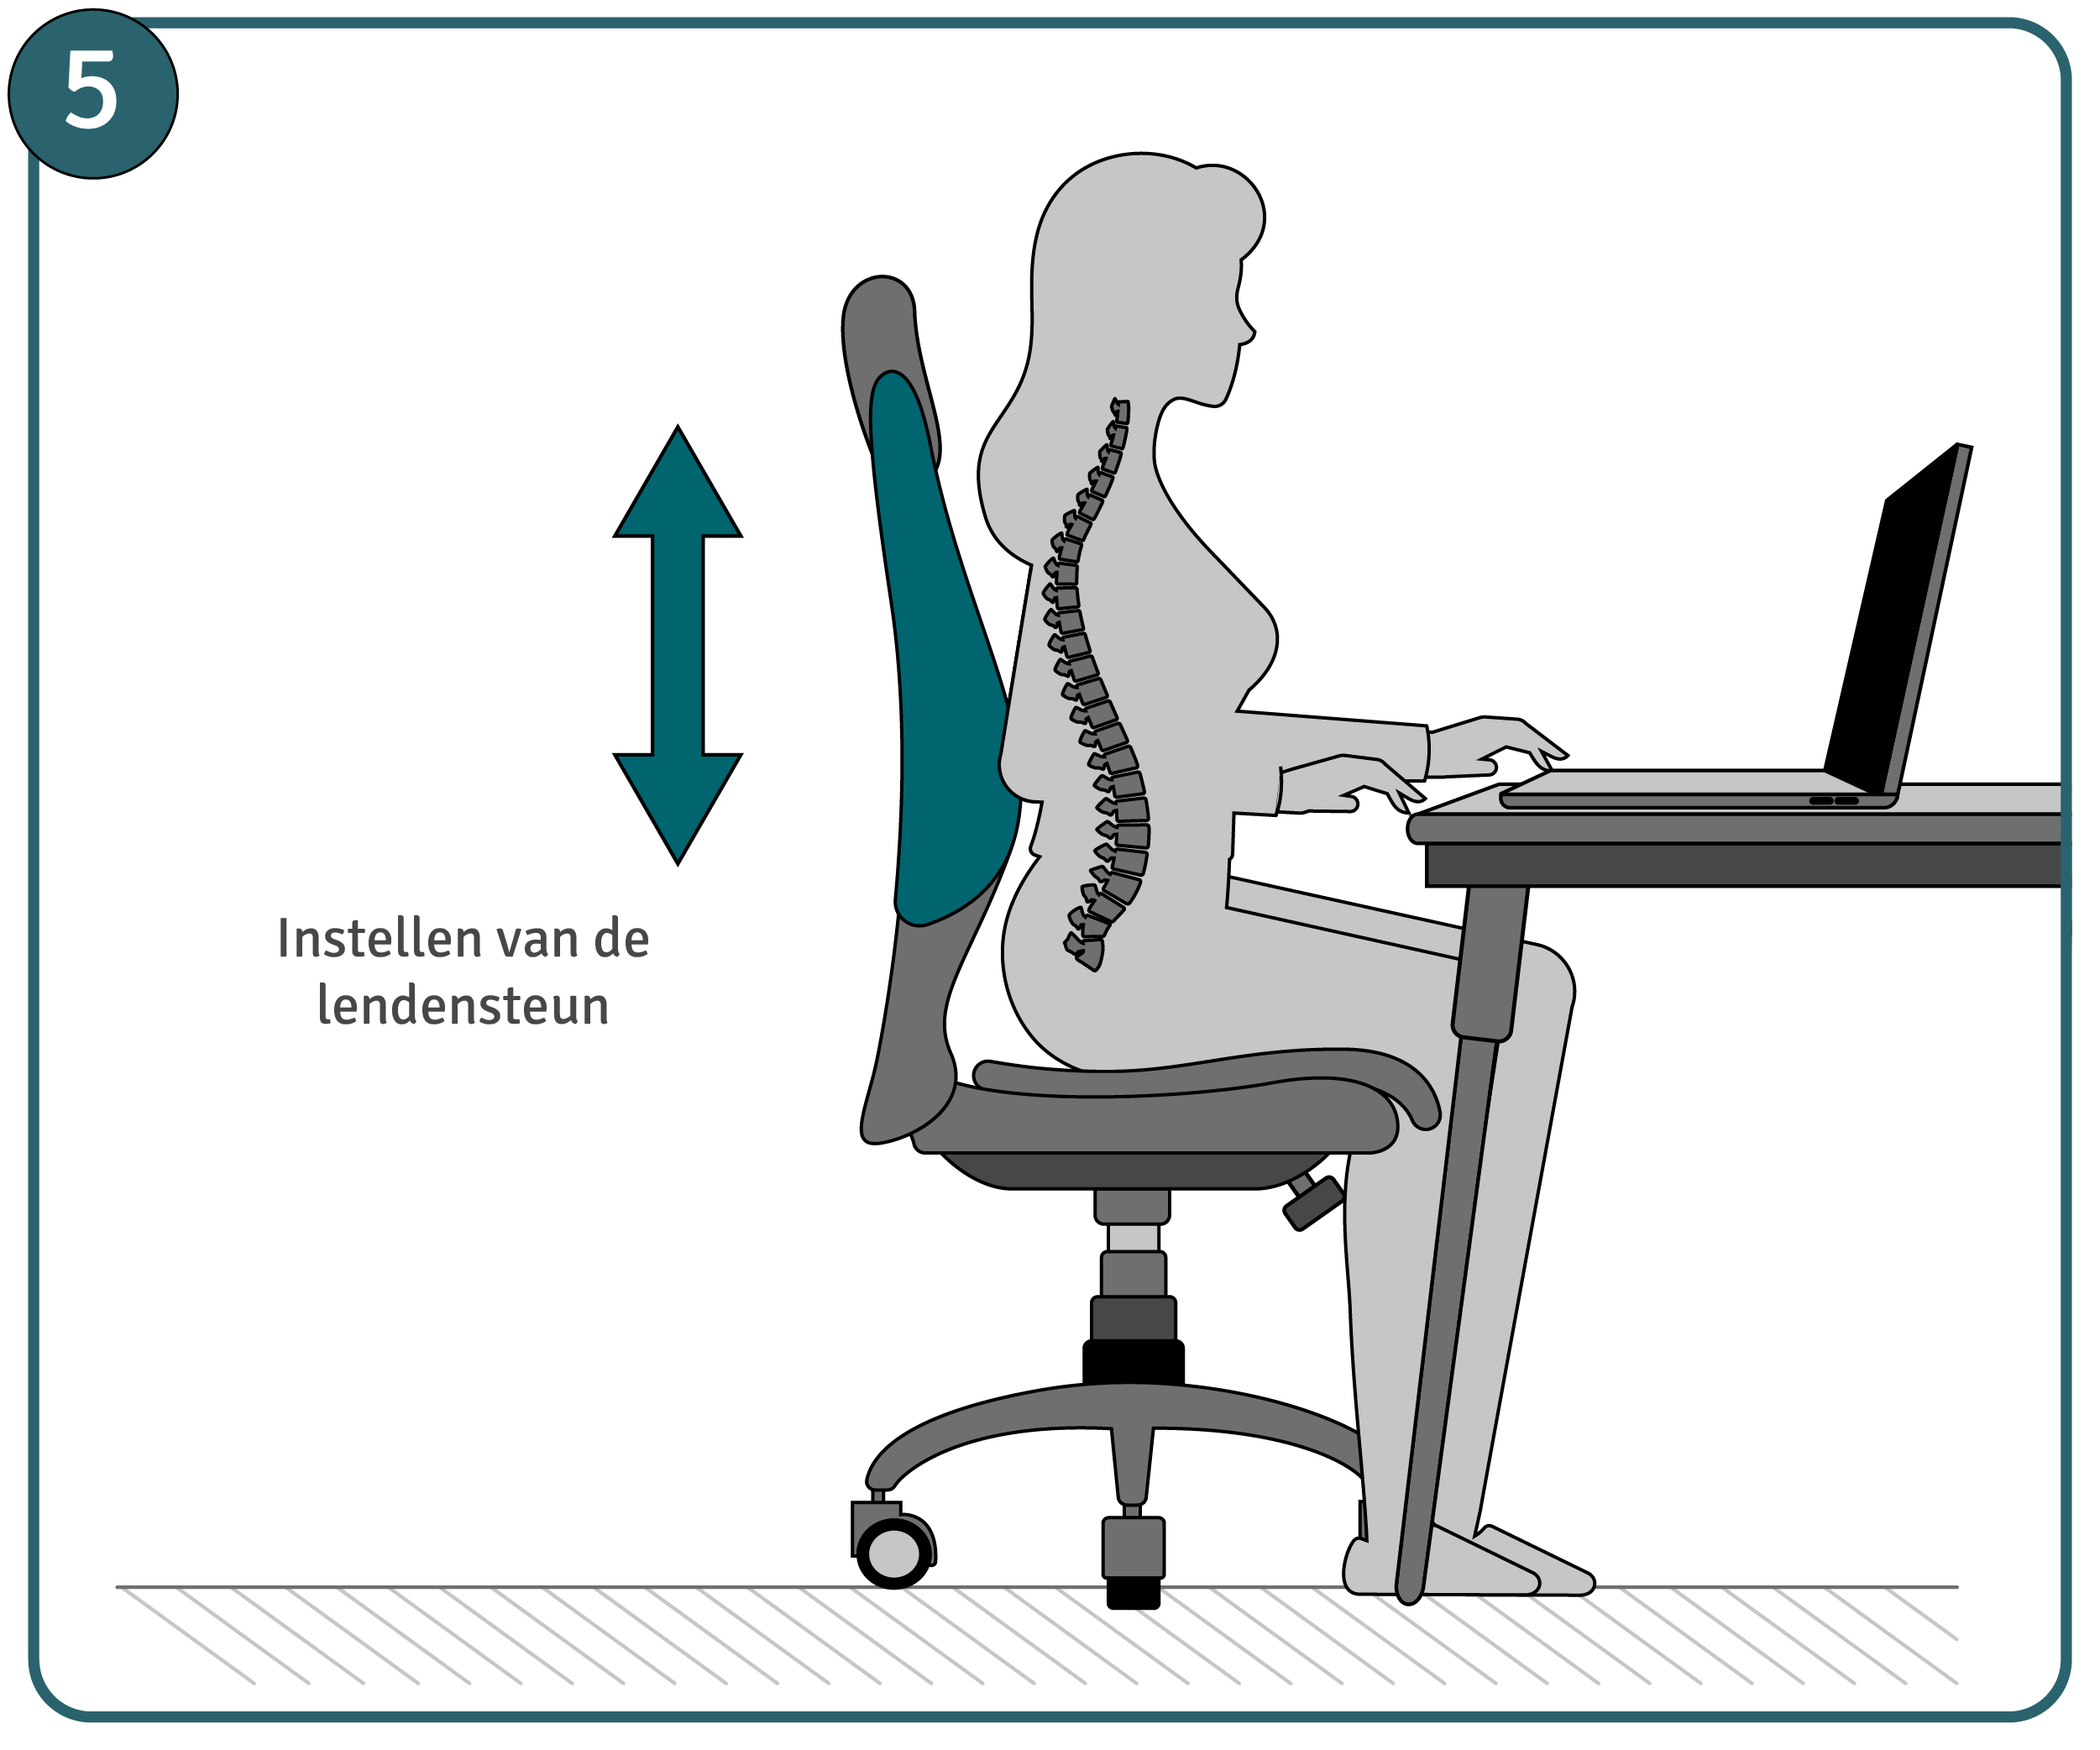 Handleiding bureaustoel instellen, stap 5: lendensteun